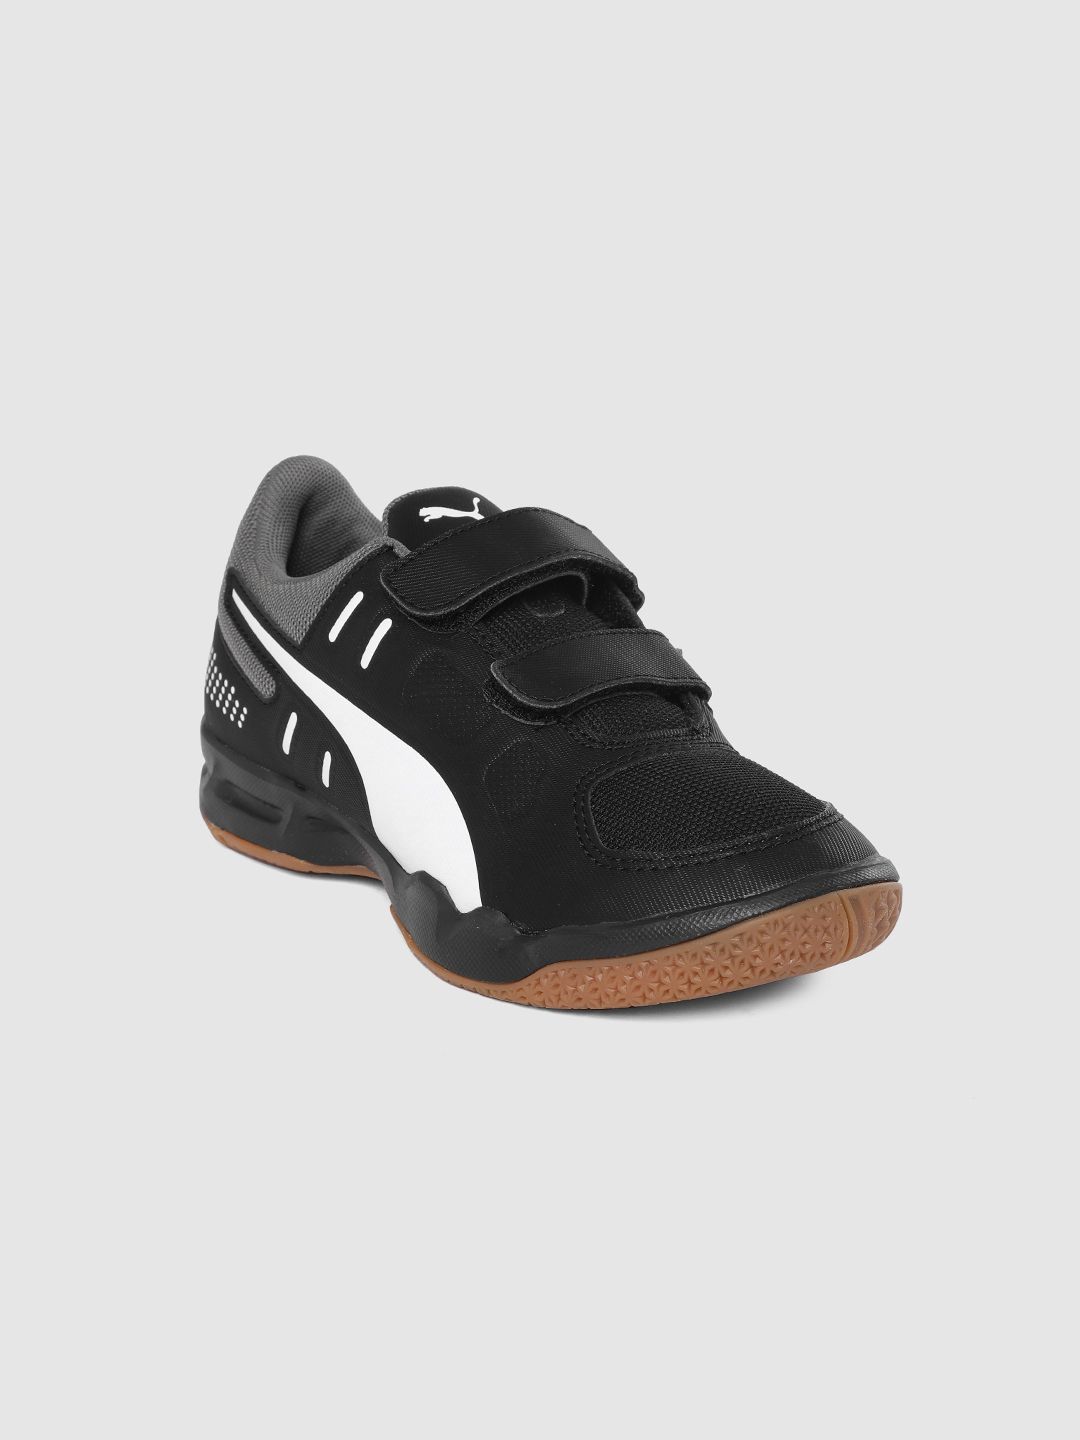 Puma Unisex Black Auriz 2 V Youth Badminton Shoes Price in India